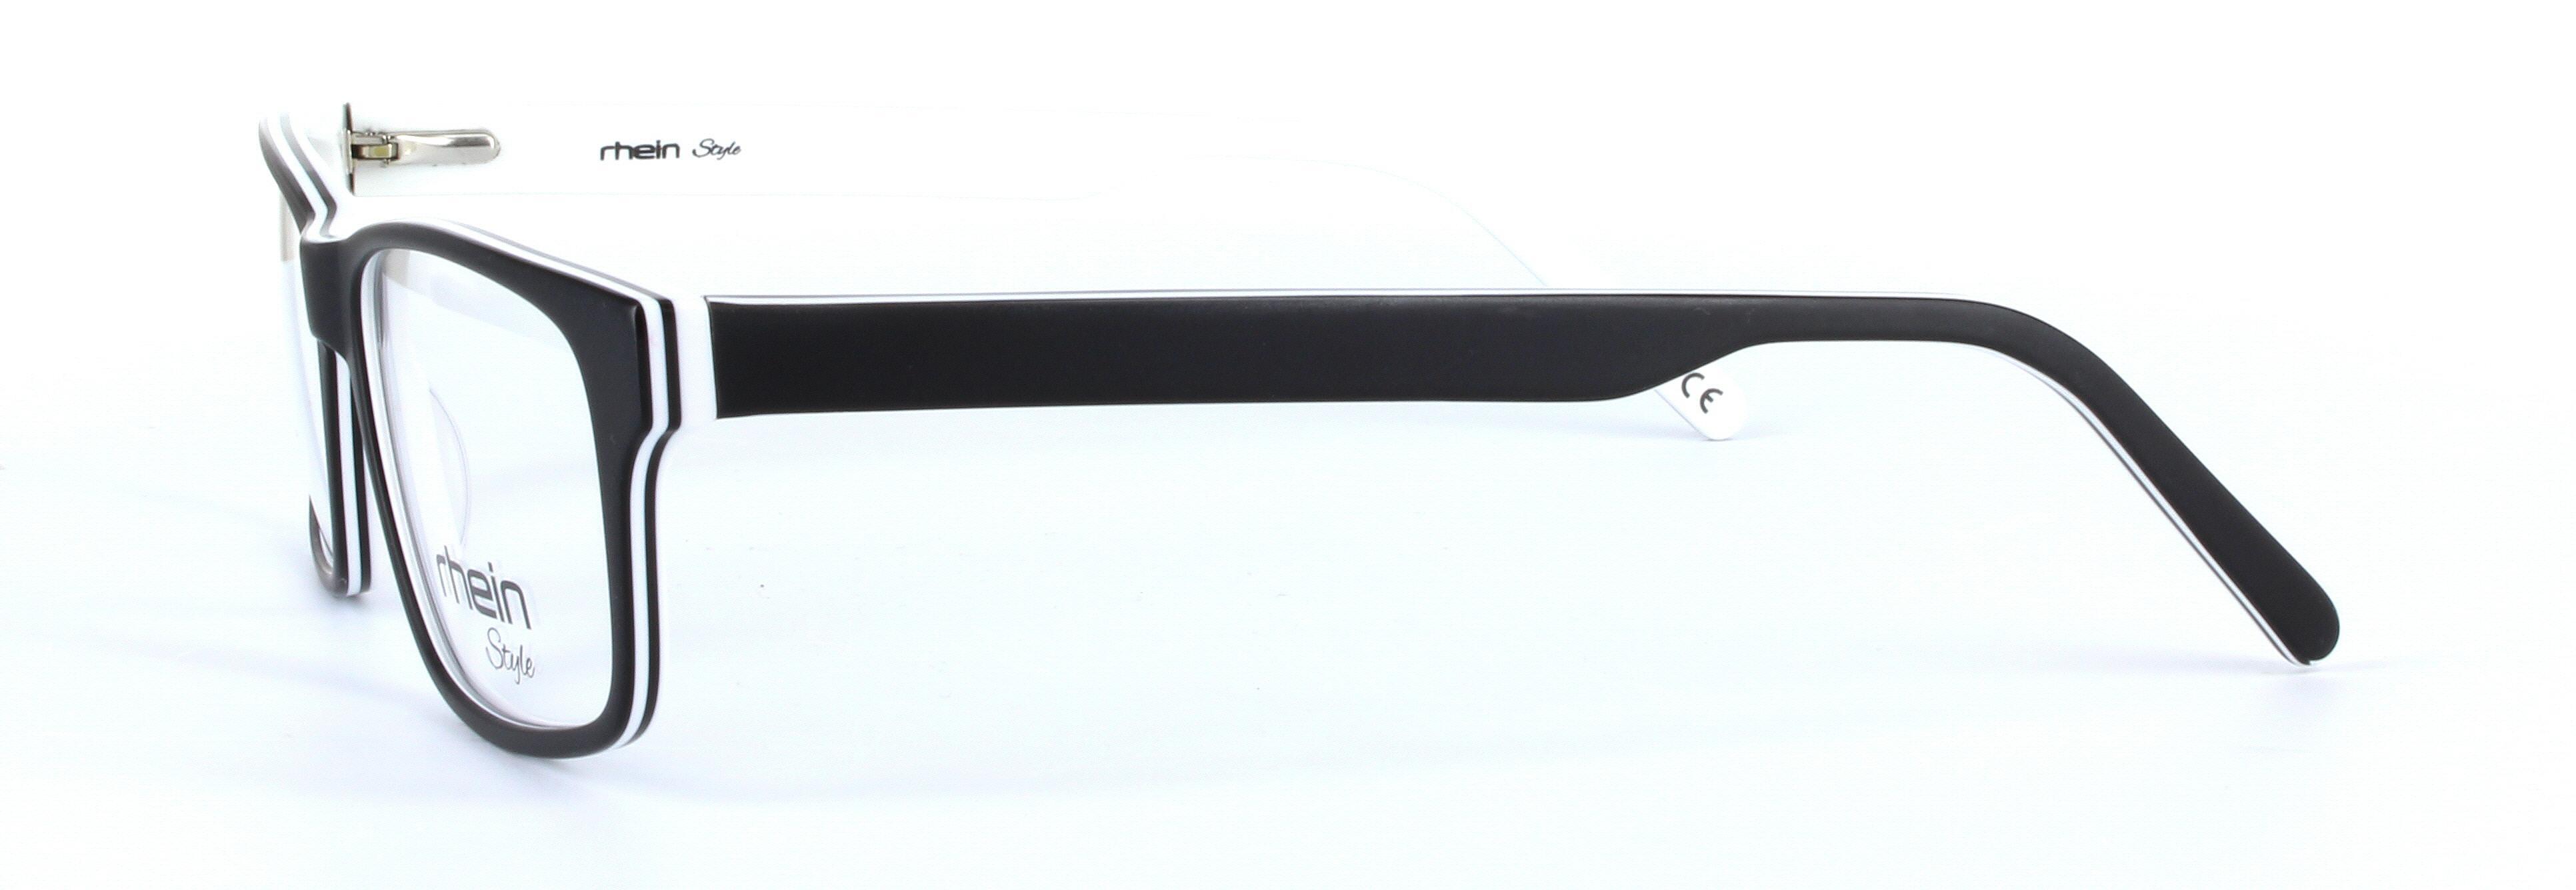 Carson Black and White Full Rim Oval Rectangular Plastic Glasses - Image View 2